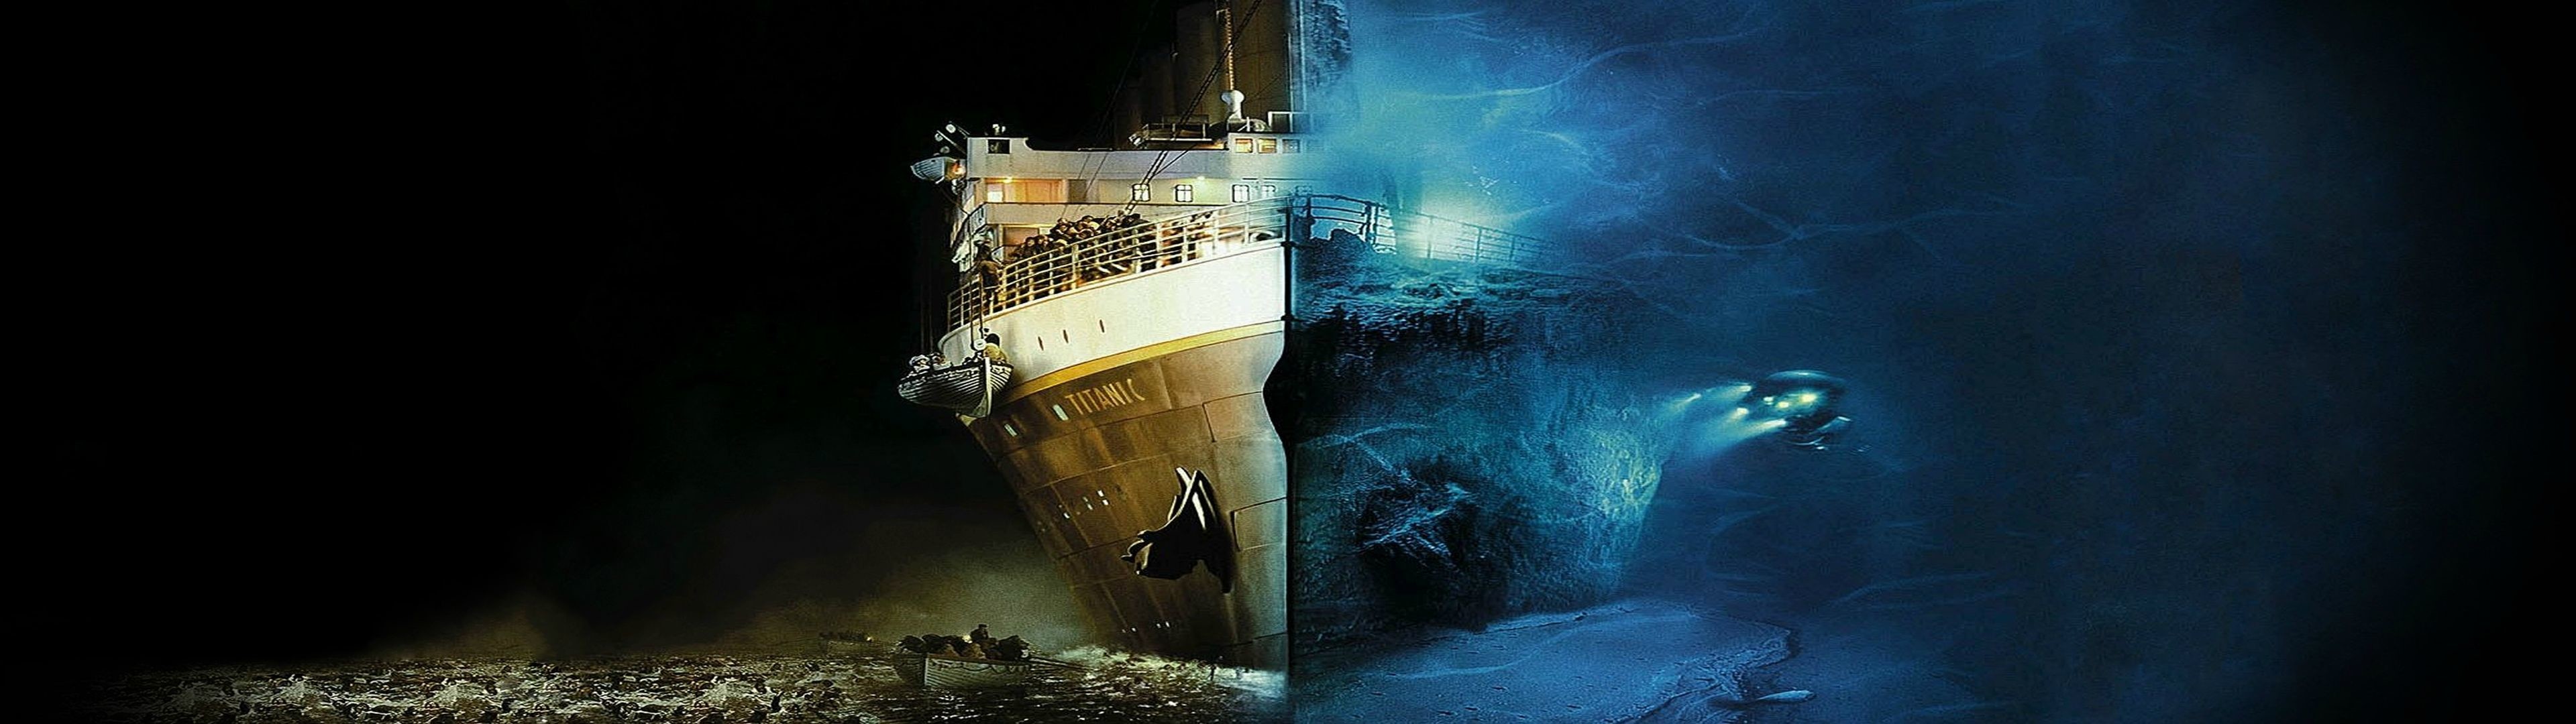 3840x1080 wallpaper.wiki-Titanic-Dual-Monitor-Pics-PIC-WPD007324